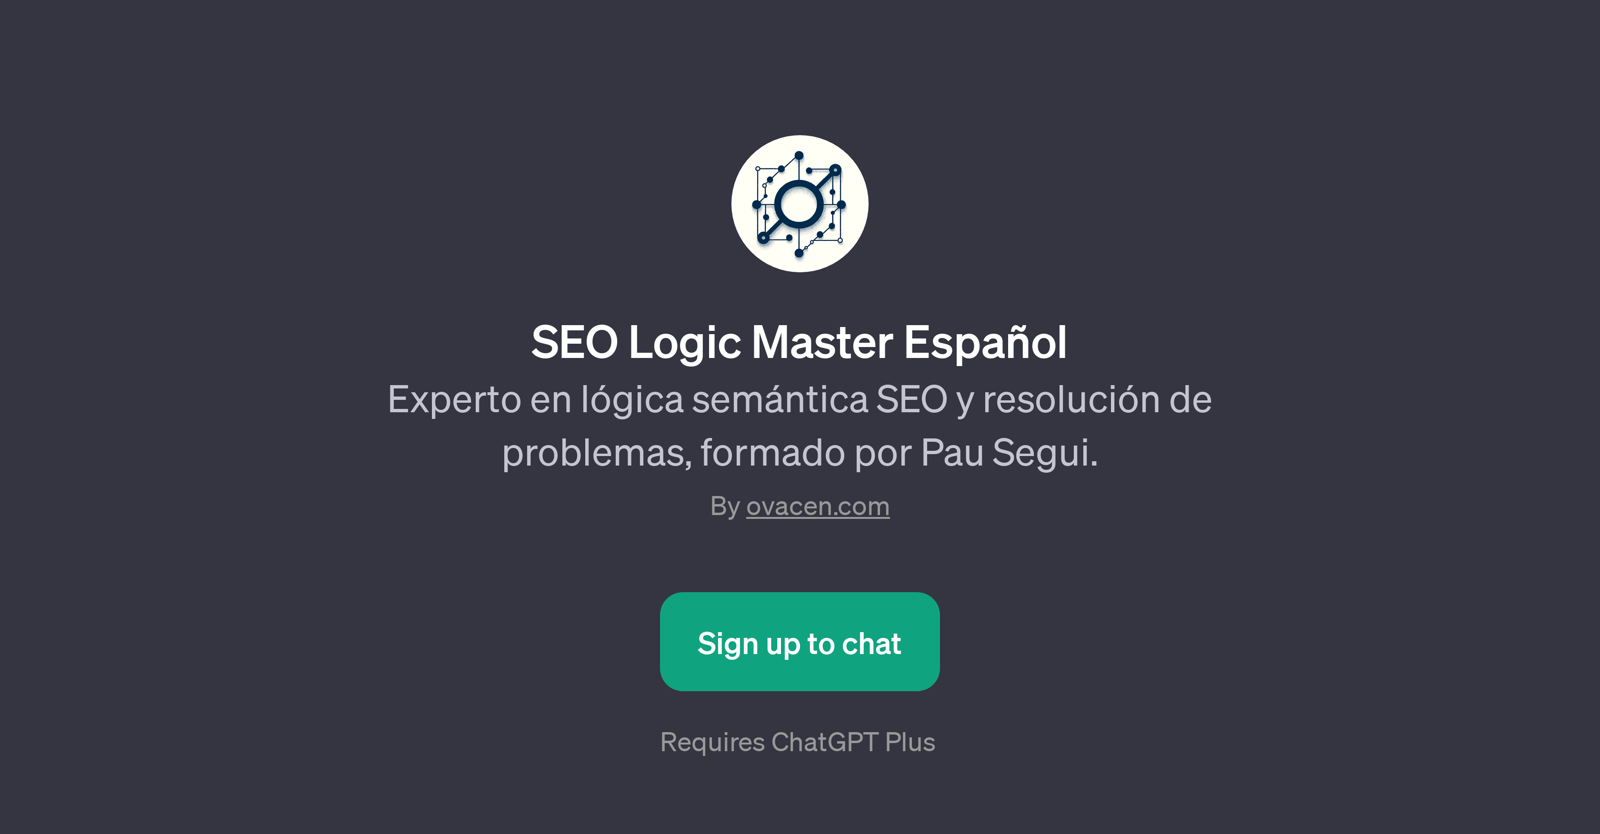 SEO Logic Master Espaol website